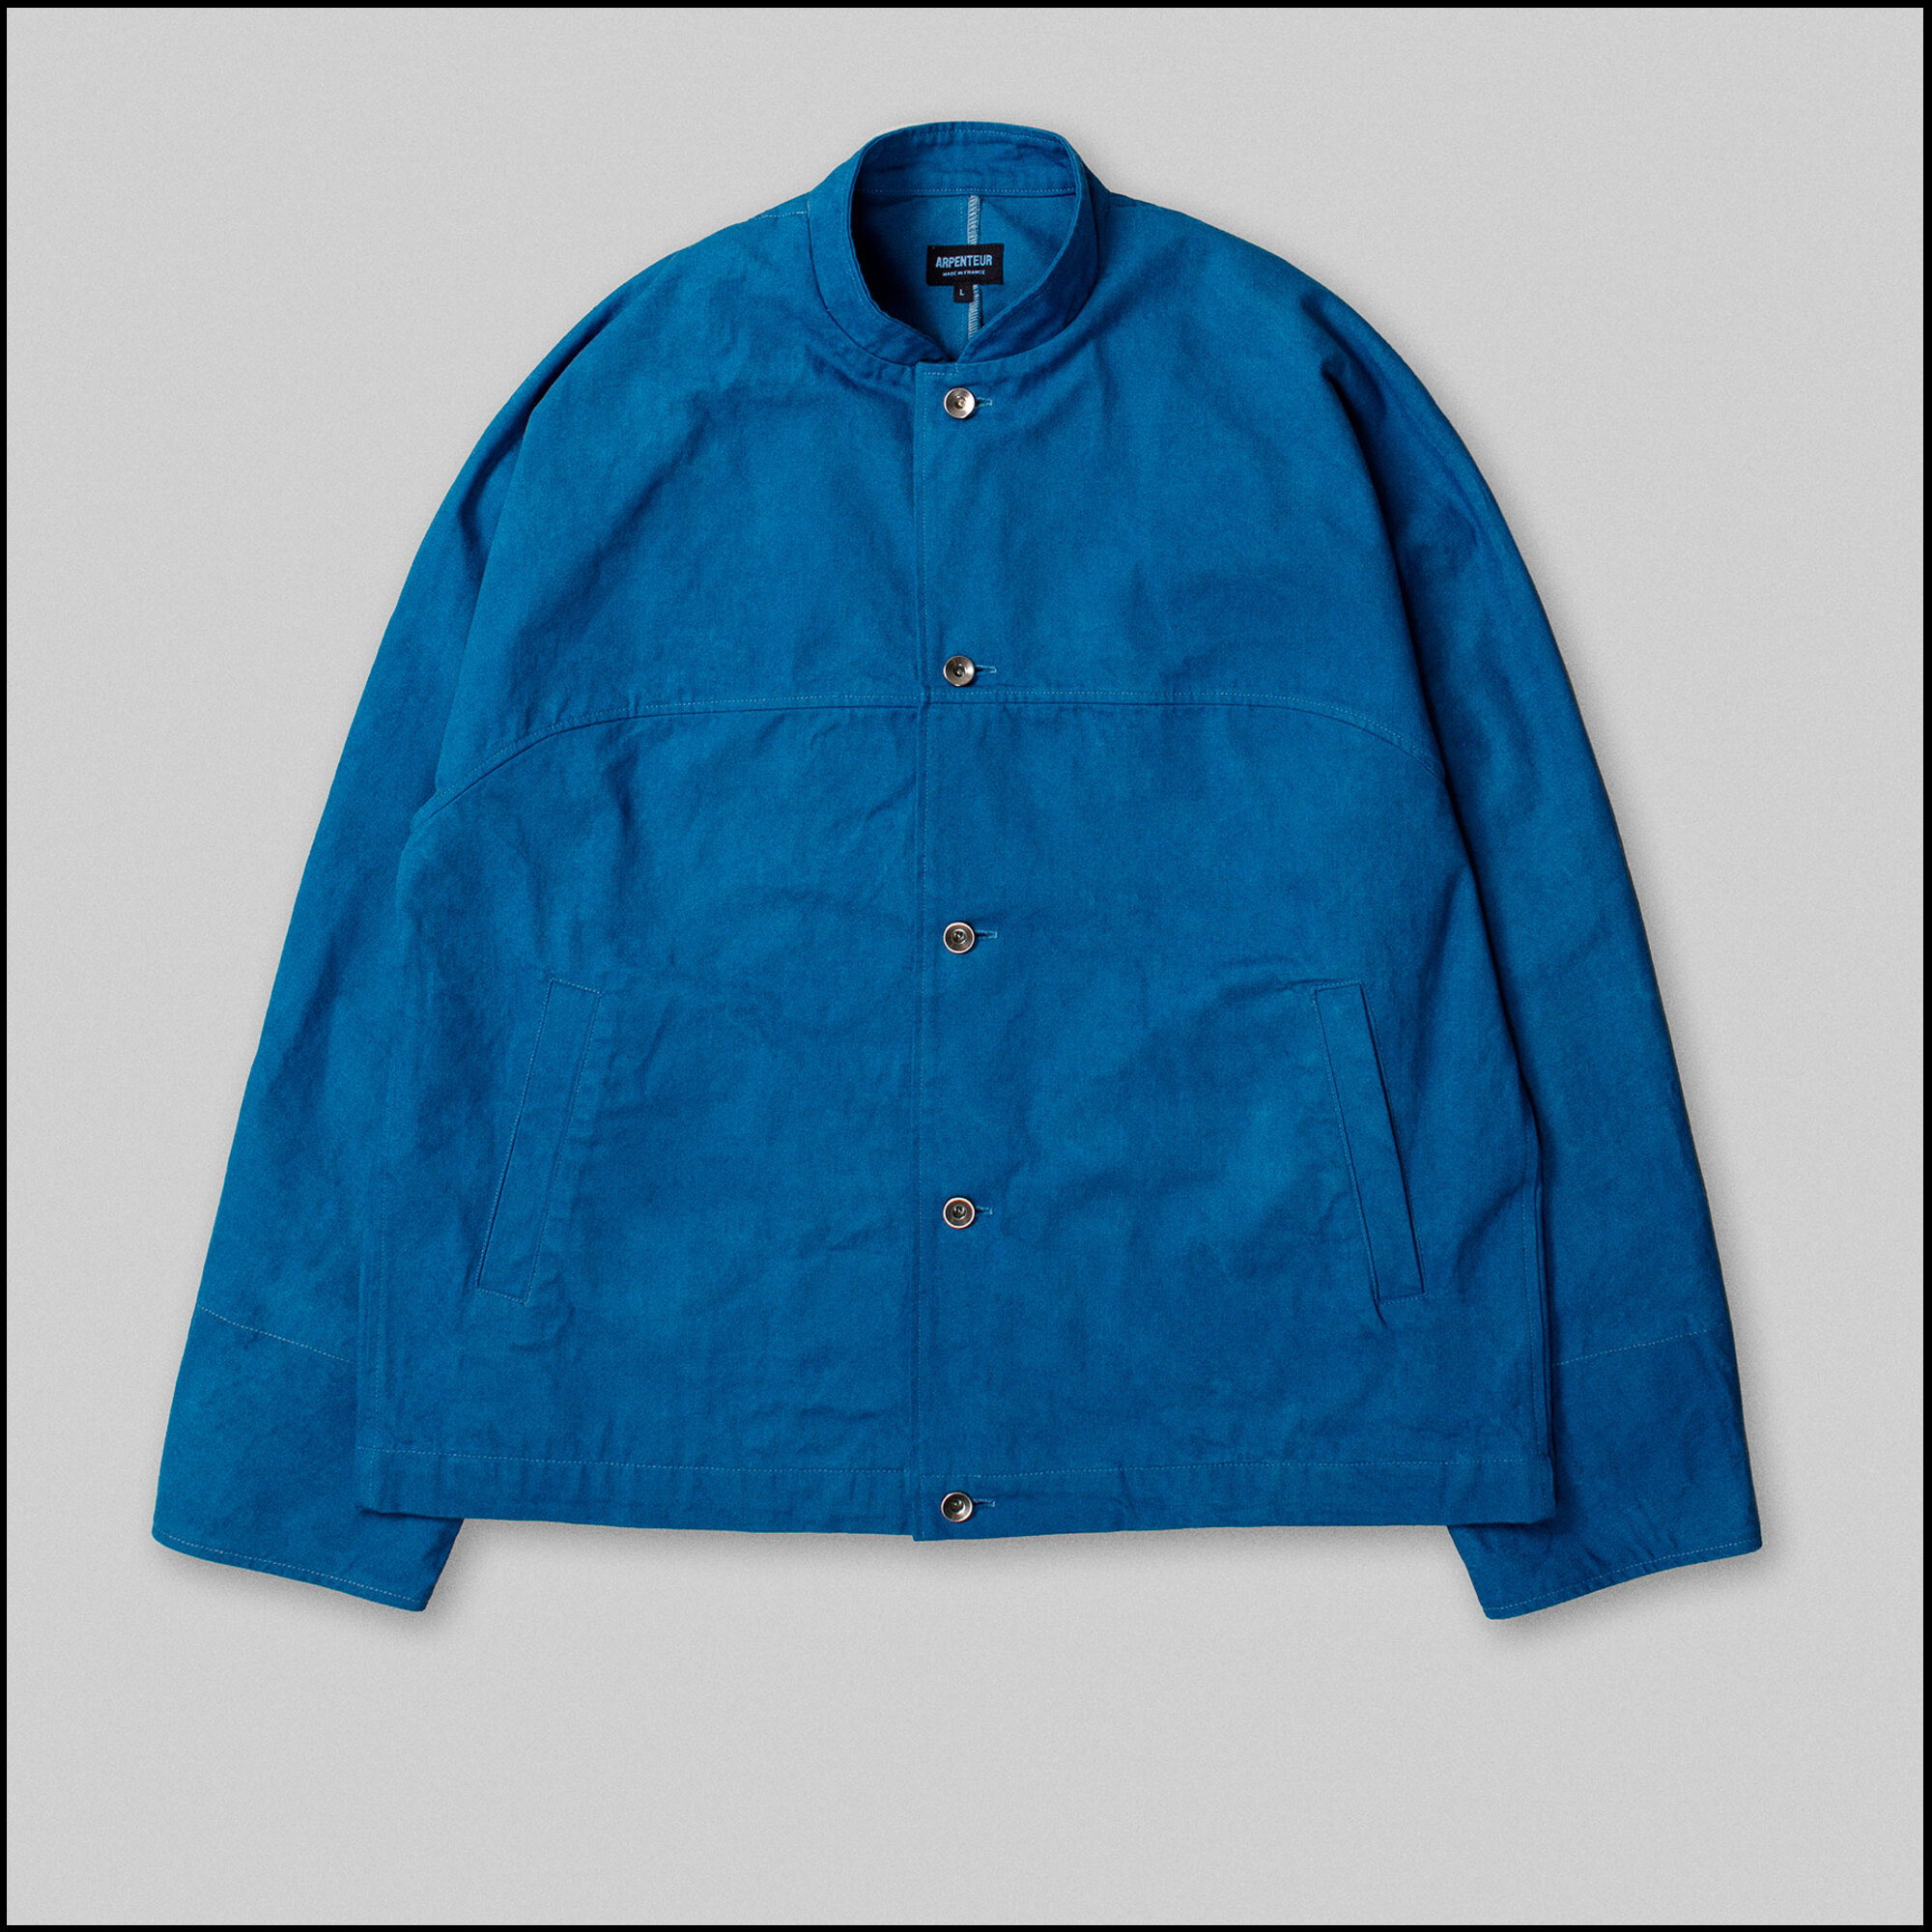 EVO Jacket by Arpenteur in Medium woad color